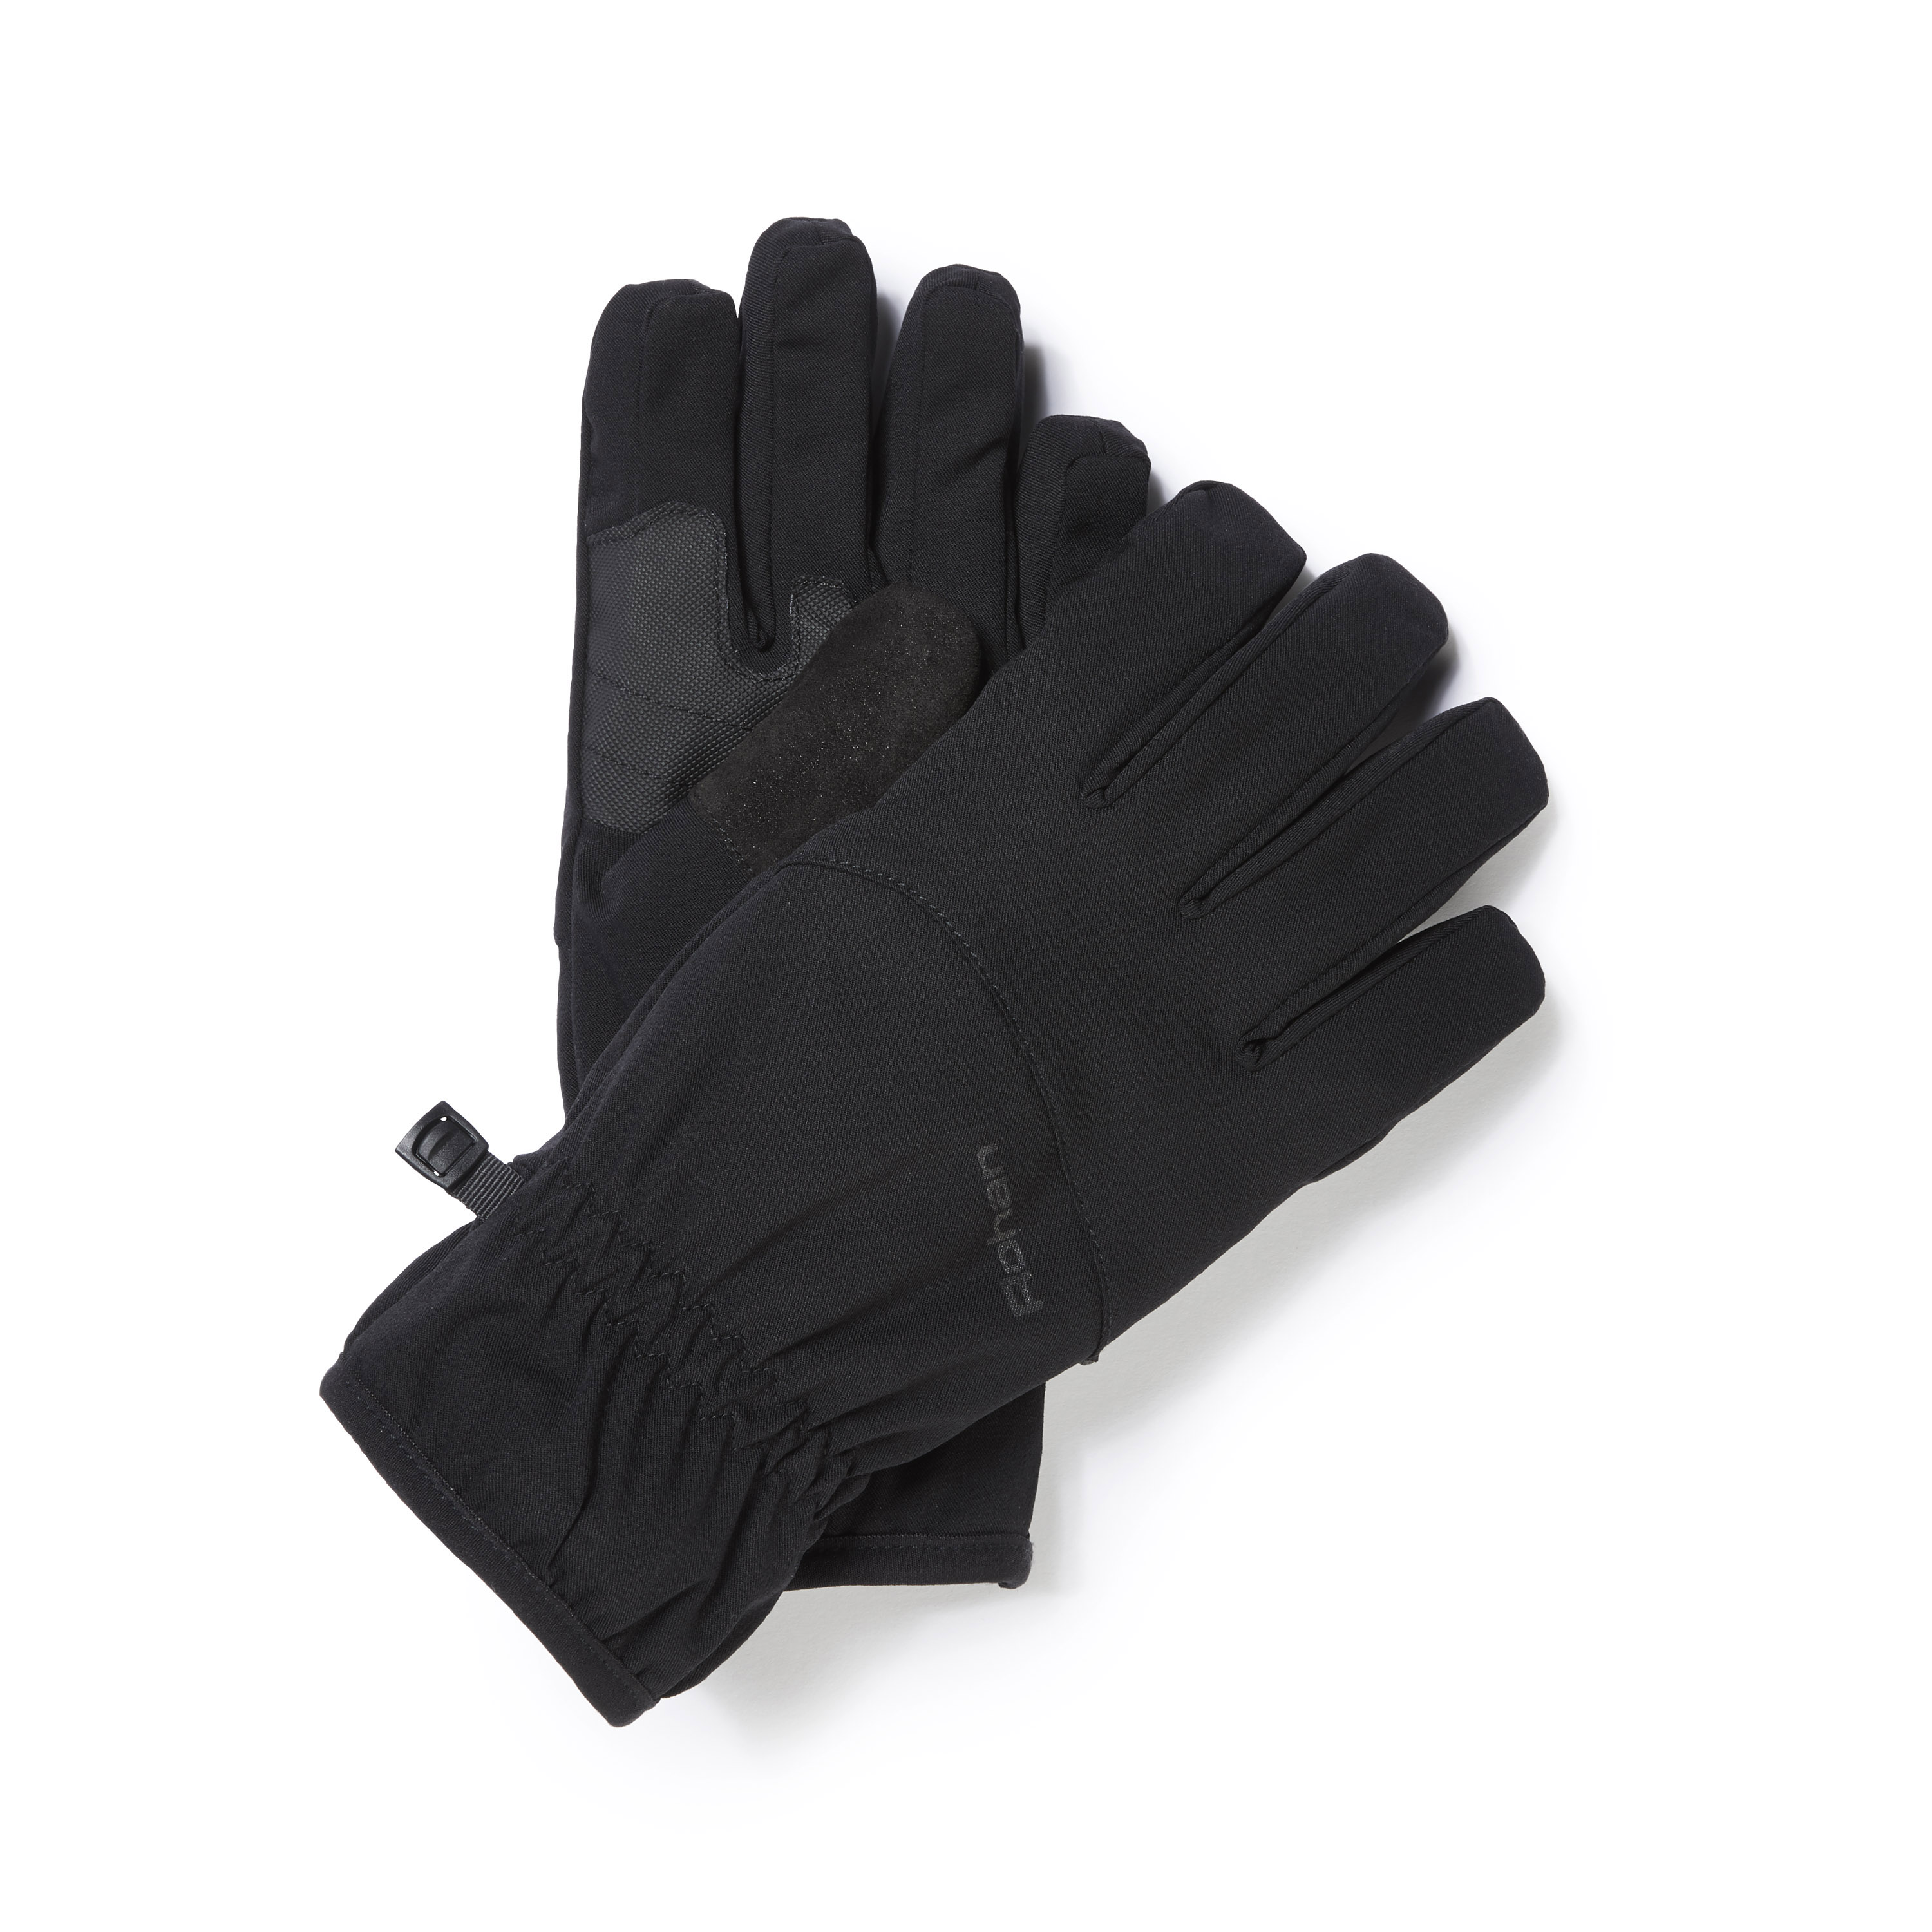 Rohan Storm Waterproof Gloves